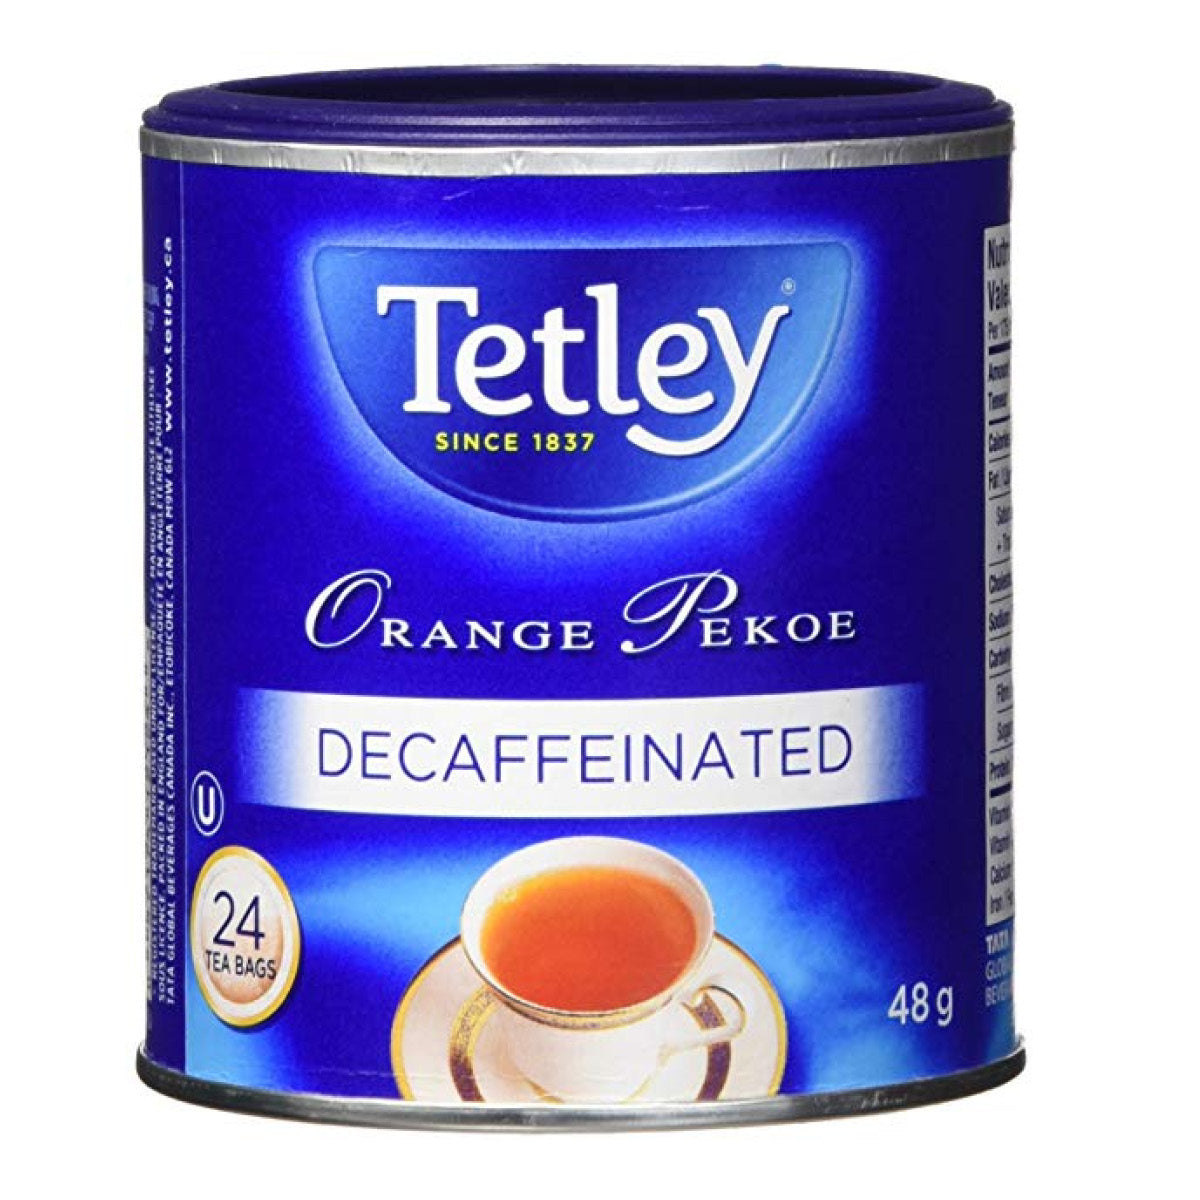 Tetley Decaffeinated Orange Pekoe Teabags, 24 bags